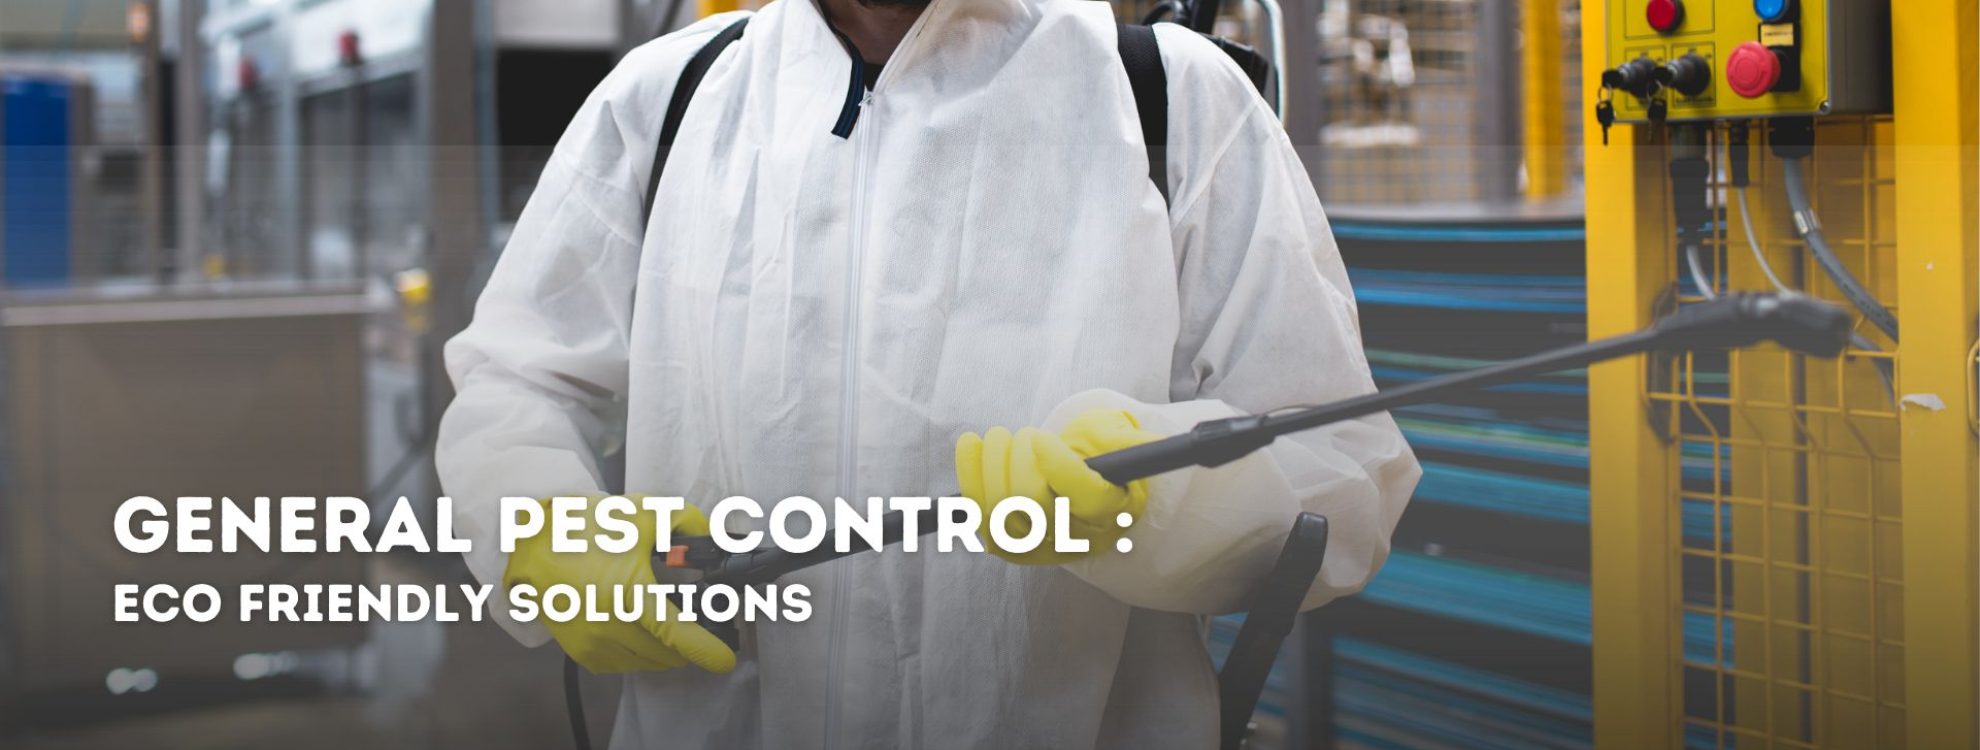 pest control professional holding genereal pest control handpump